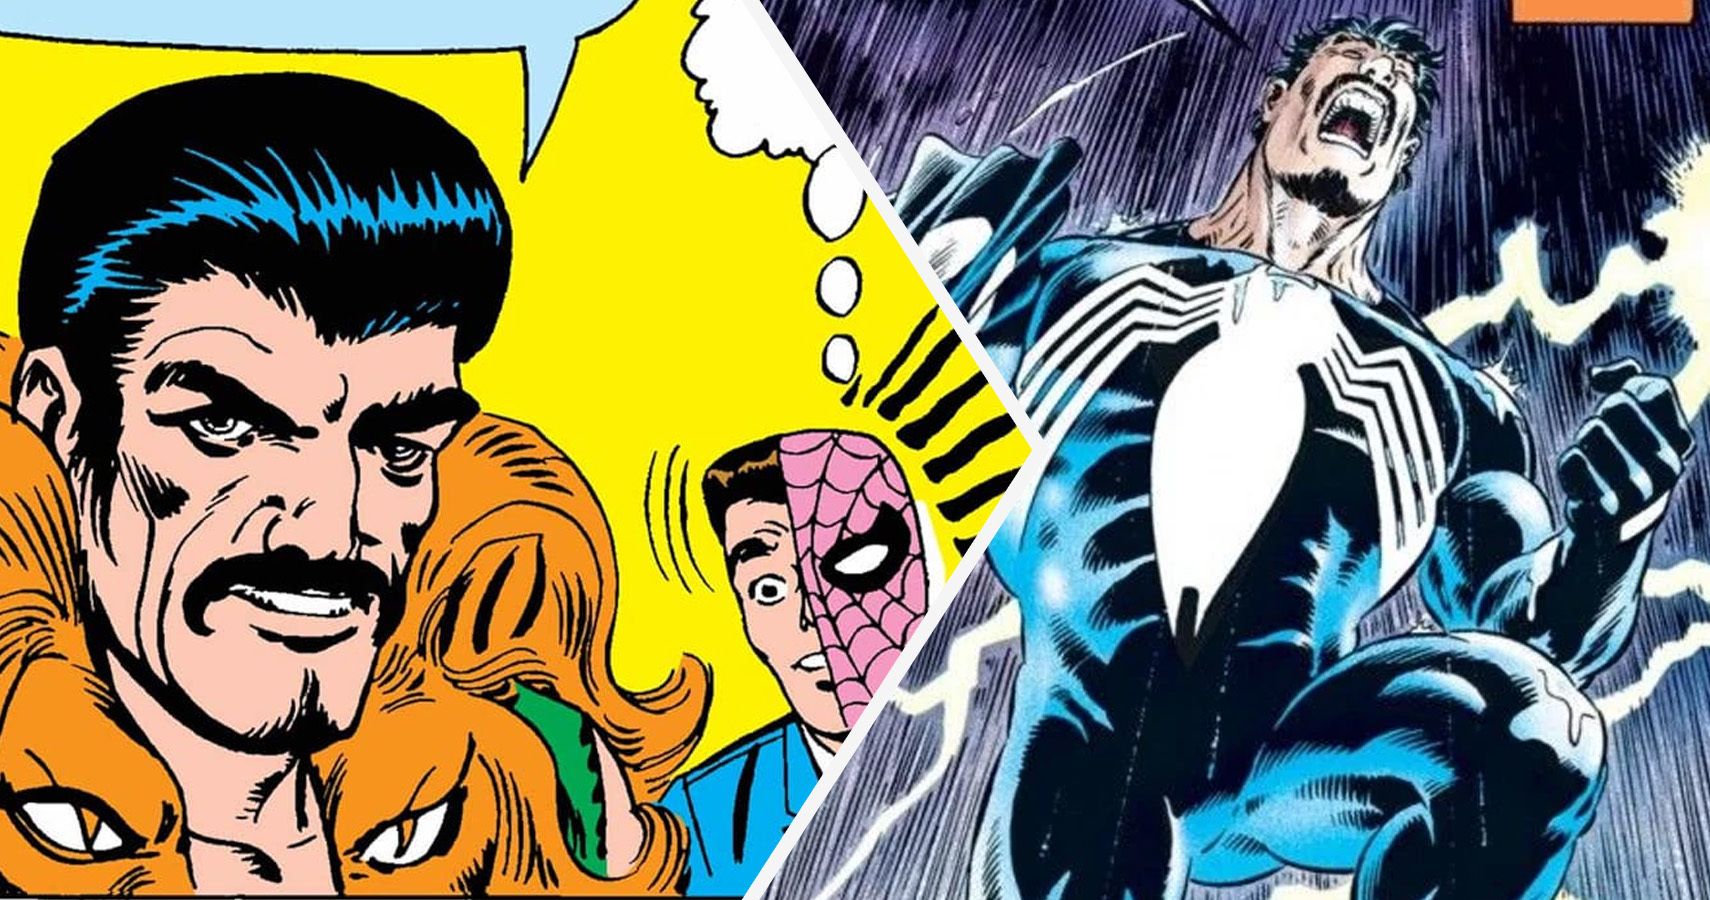 A split image of Kraven the Hunter in Spider-Man comics